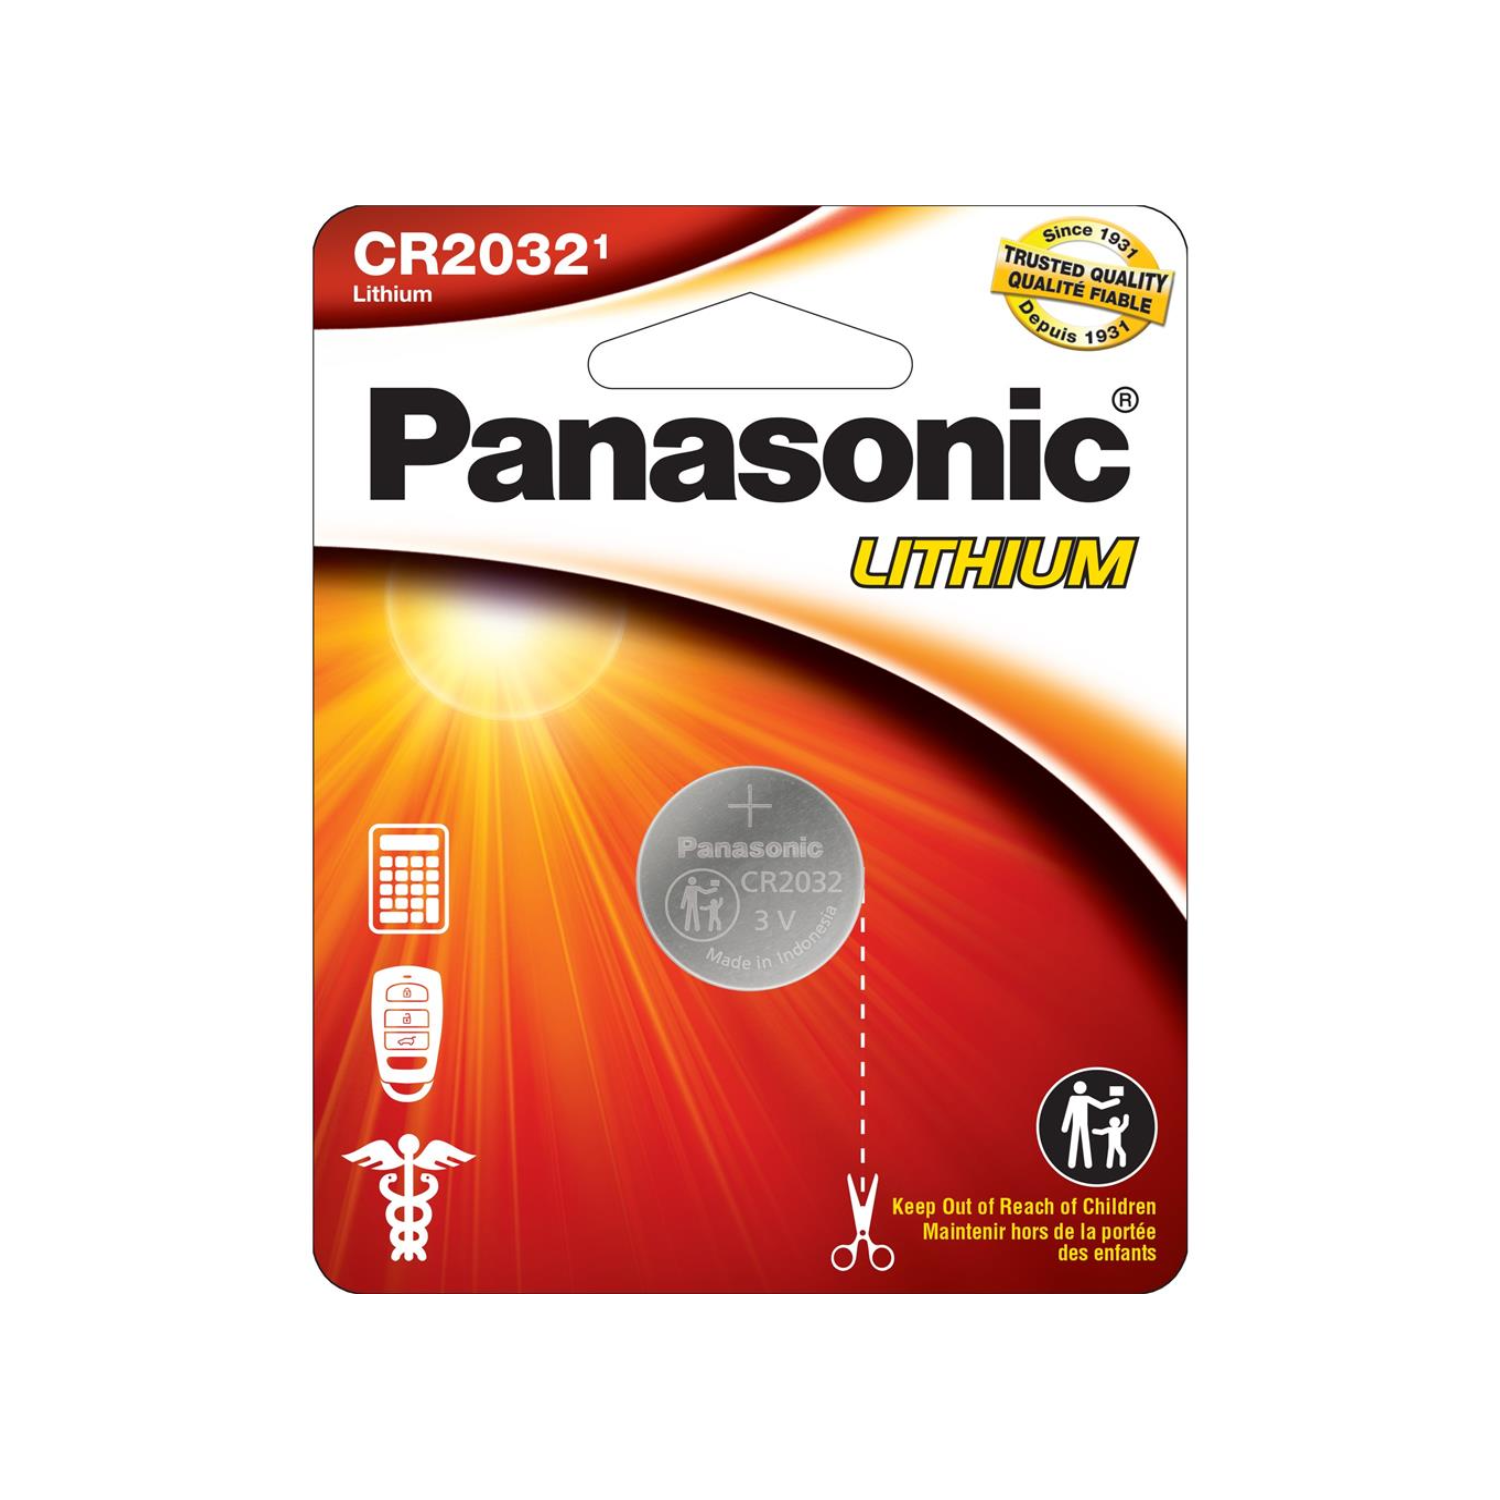 Panasonic 2032 3V Lithium Coin Cell Battery 1 Pack